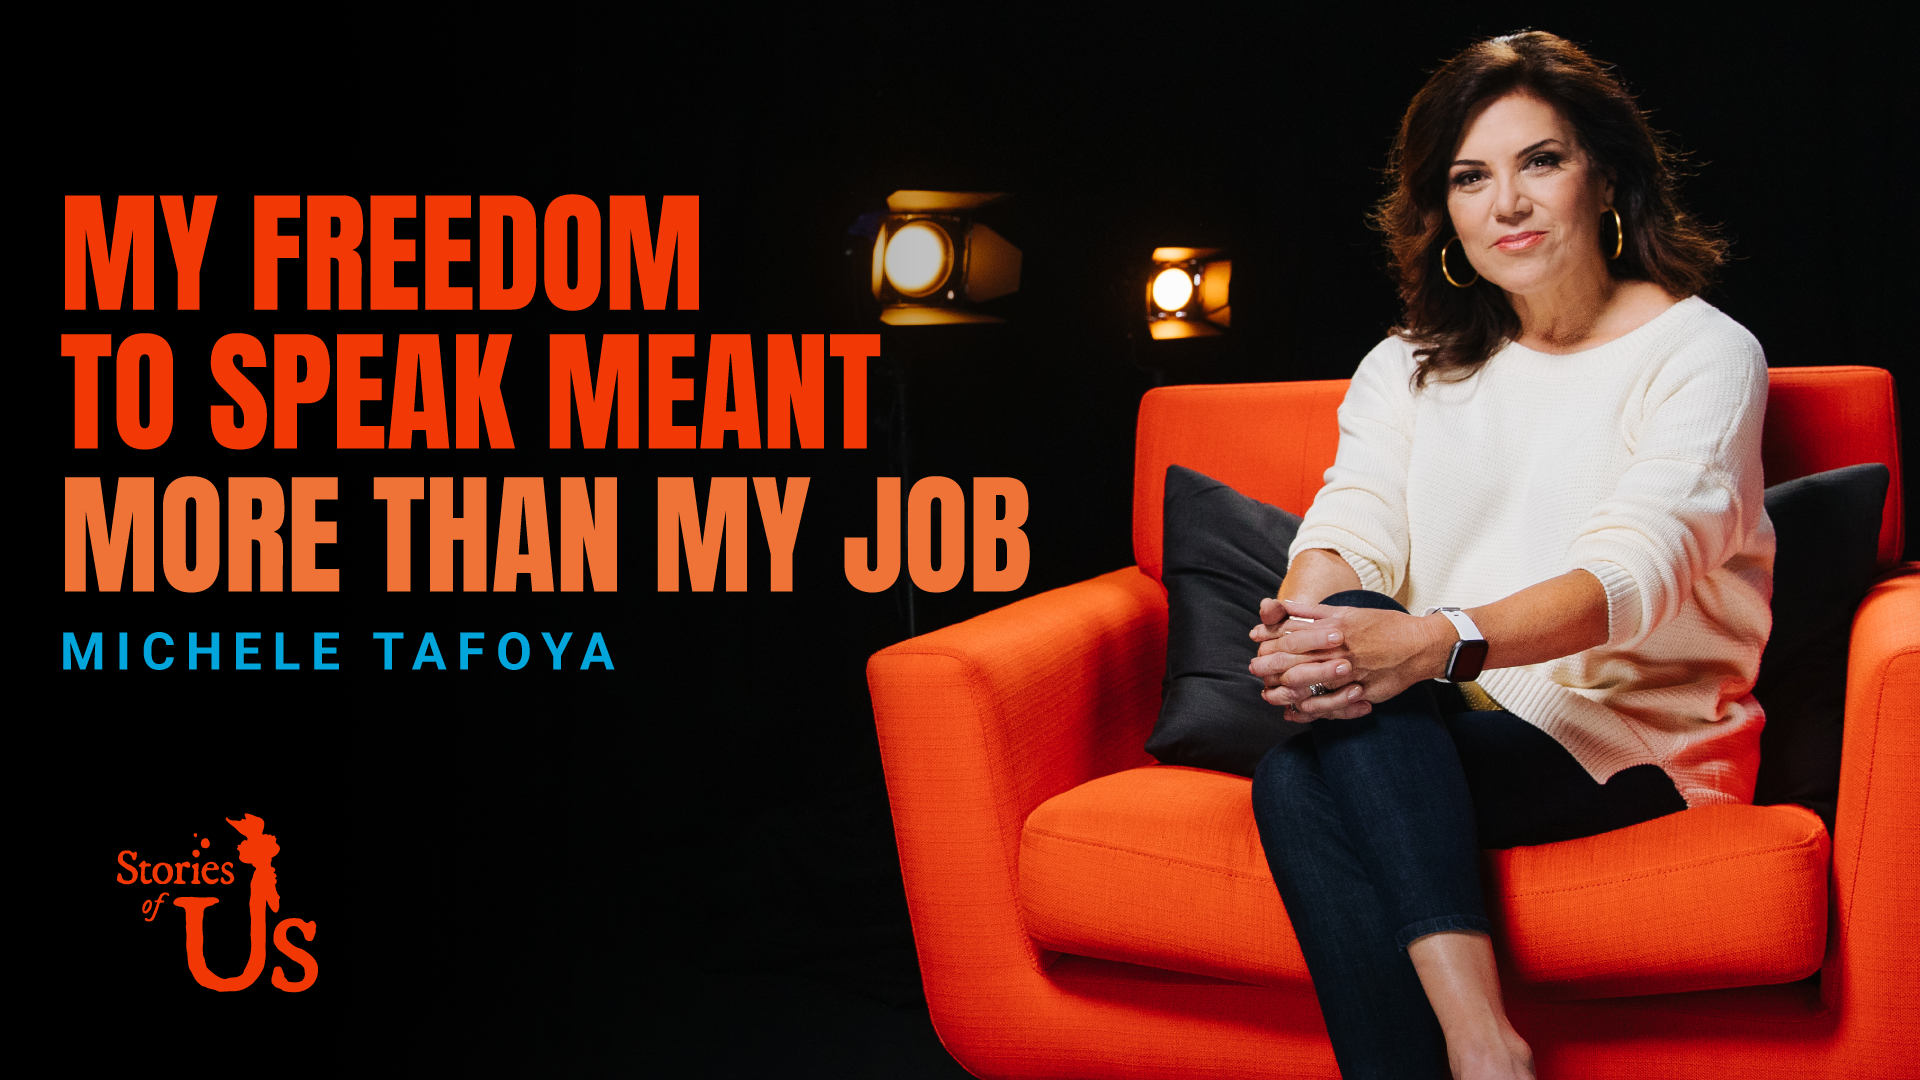 Michele Tafoya: My Freedom to Speak Meant More than My Job